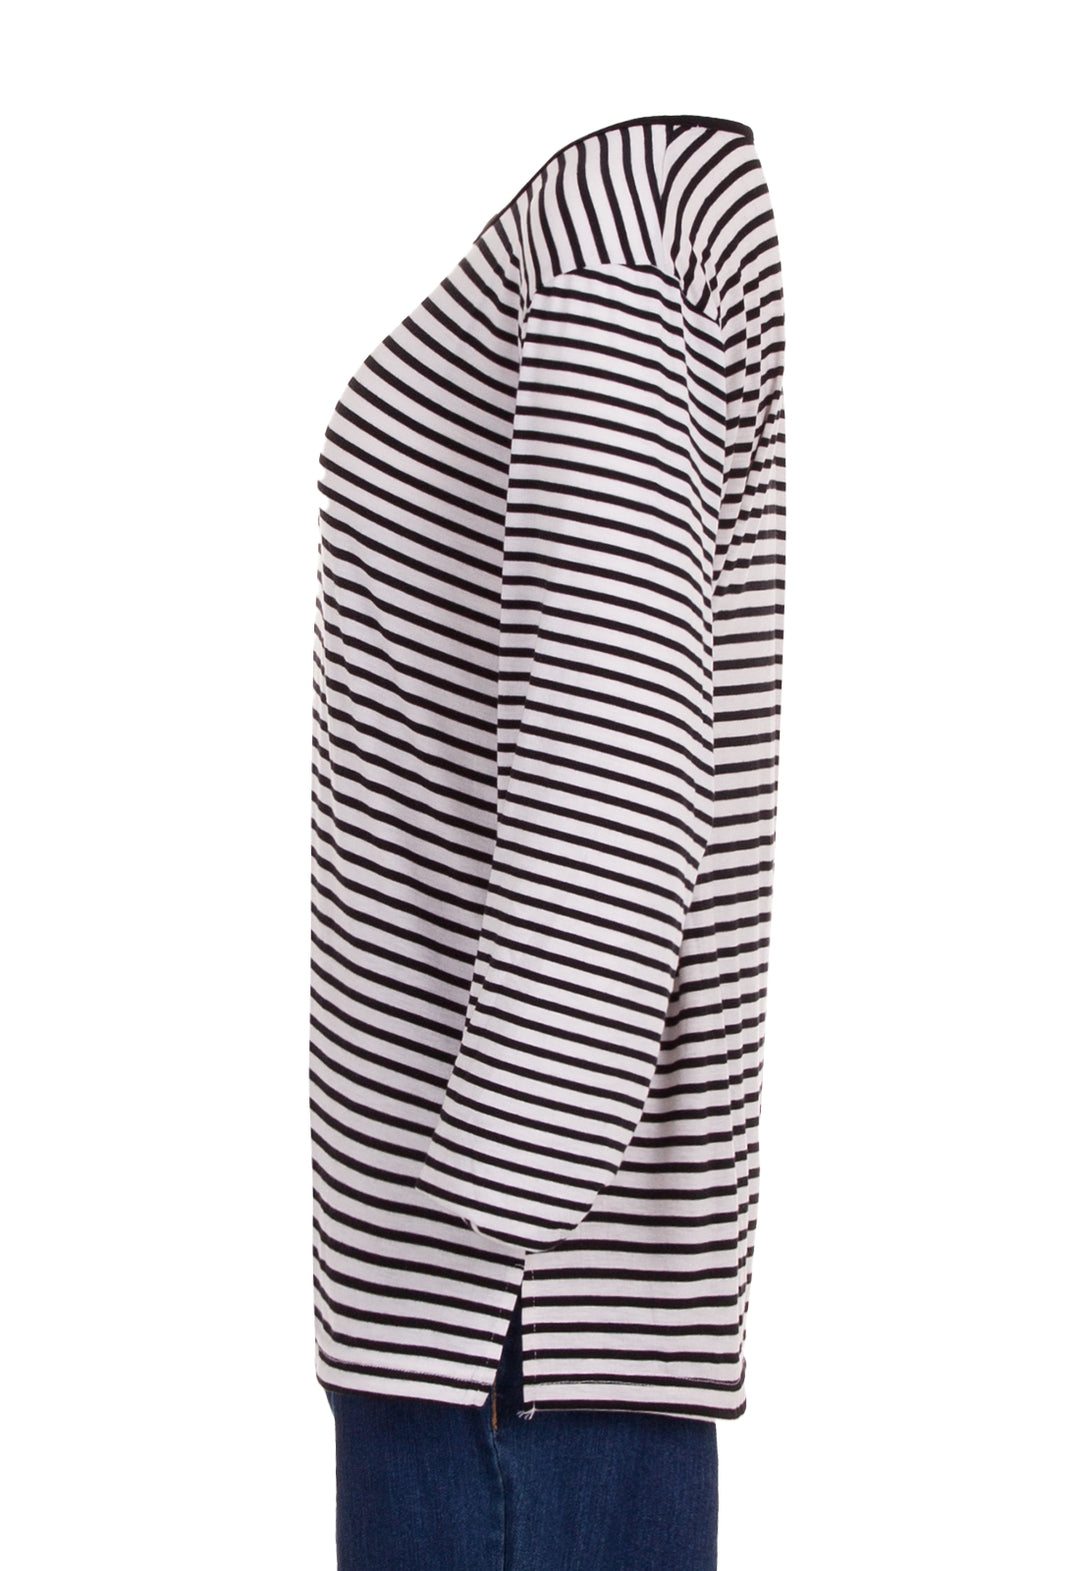 Long sleeve shirt - striped